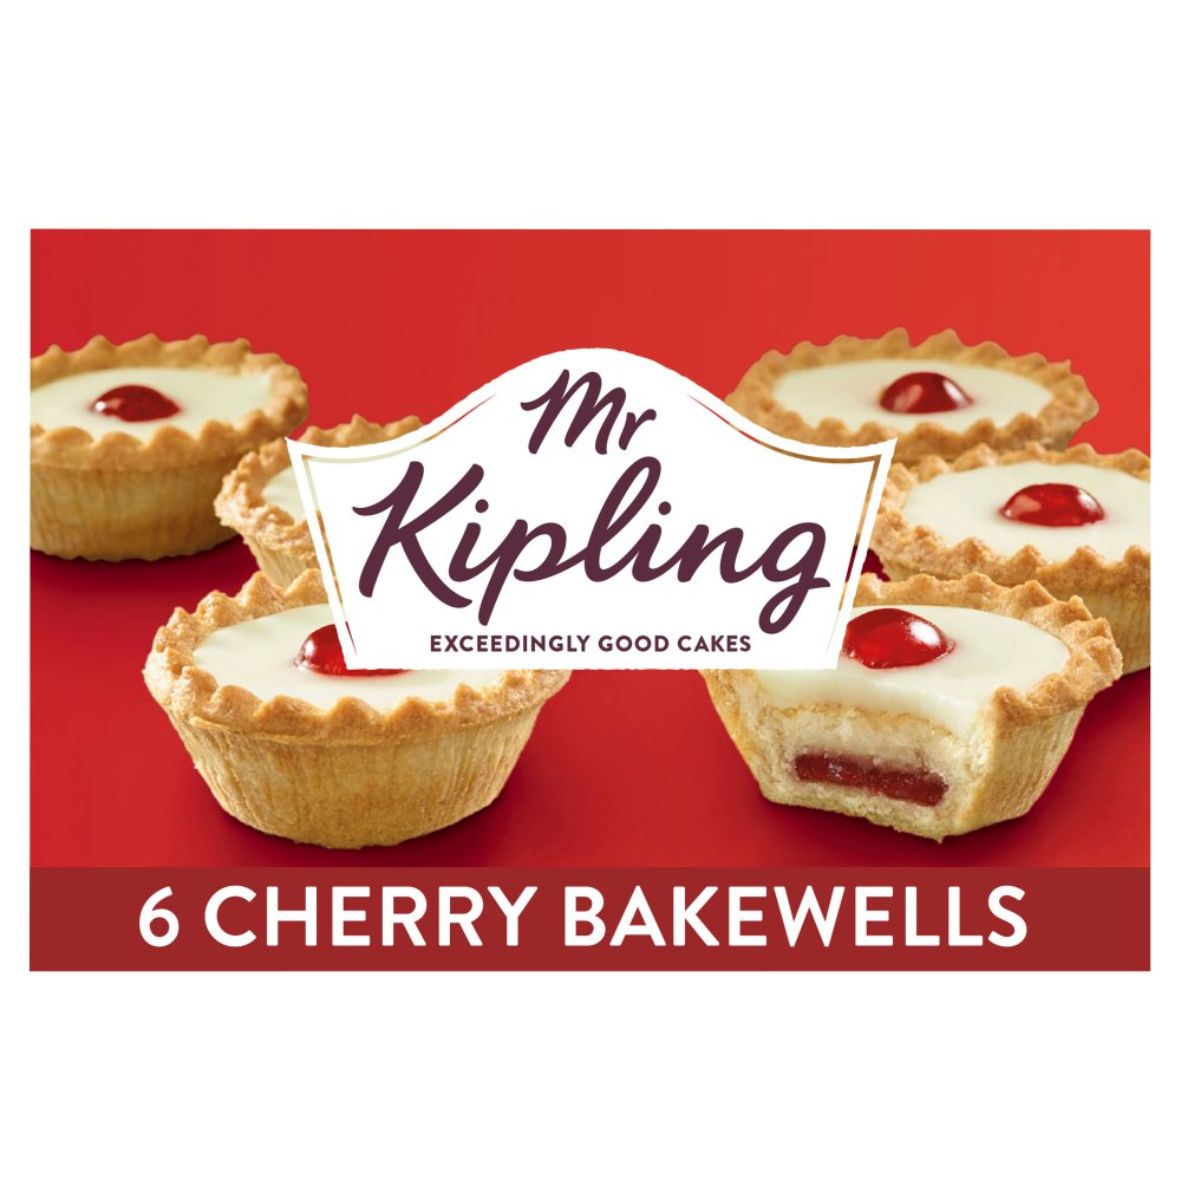 Mr Kipling - Cherry Bakewell Tarts - 6pcs